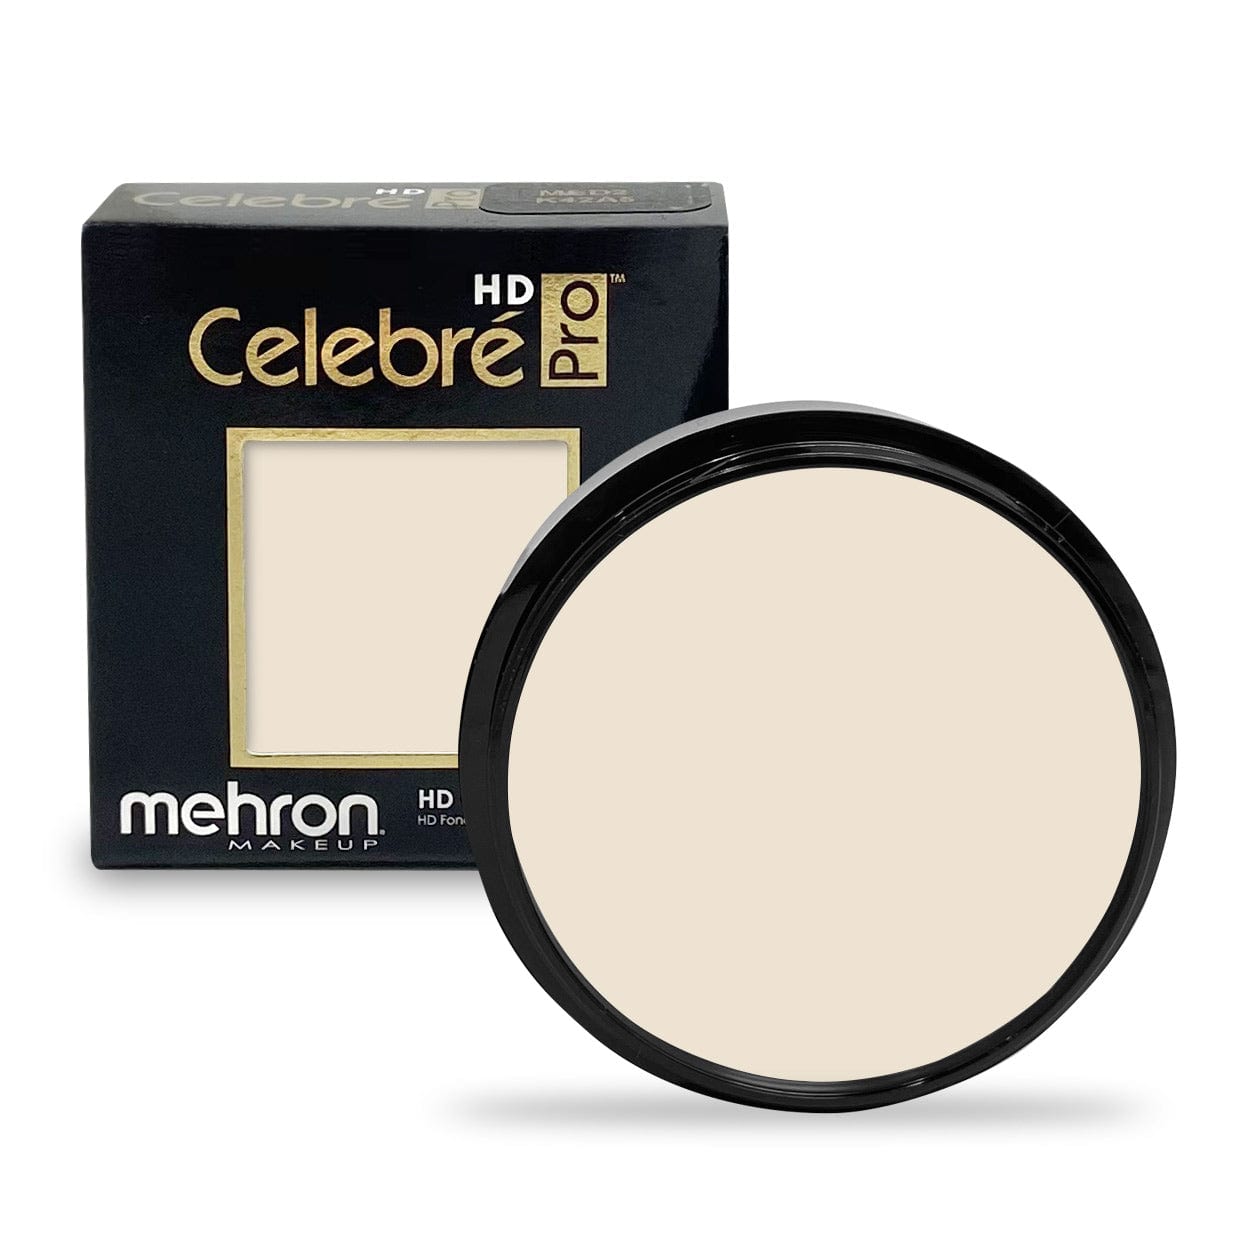 Mehron Celebre Pro HD Cream 25g - LT0 Eurasia Ivory - Mehron